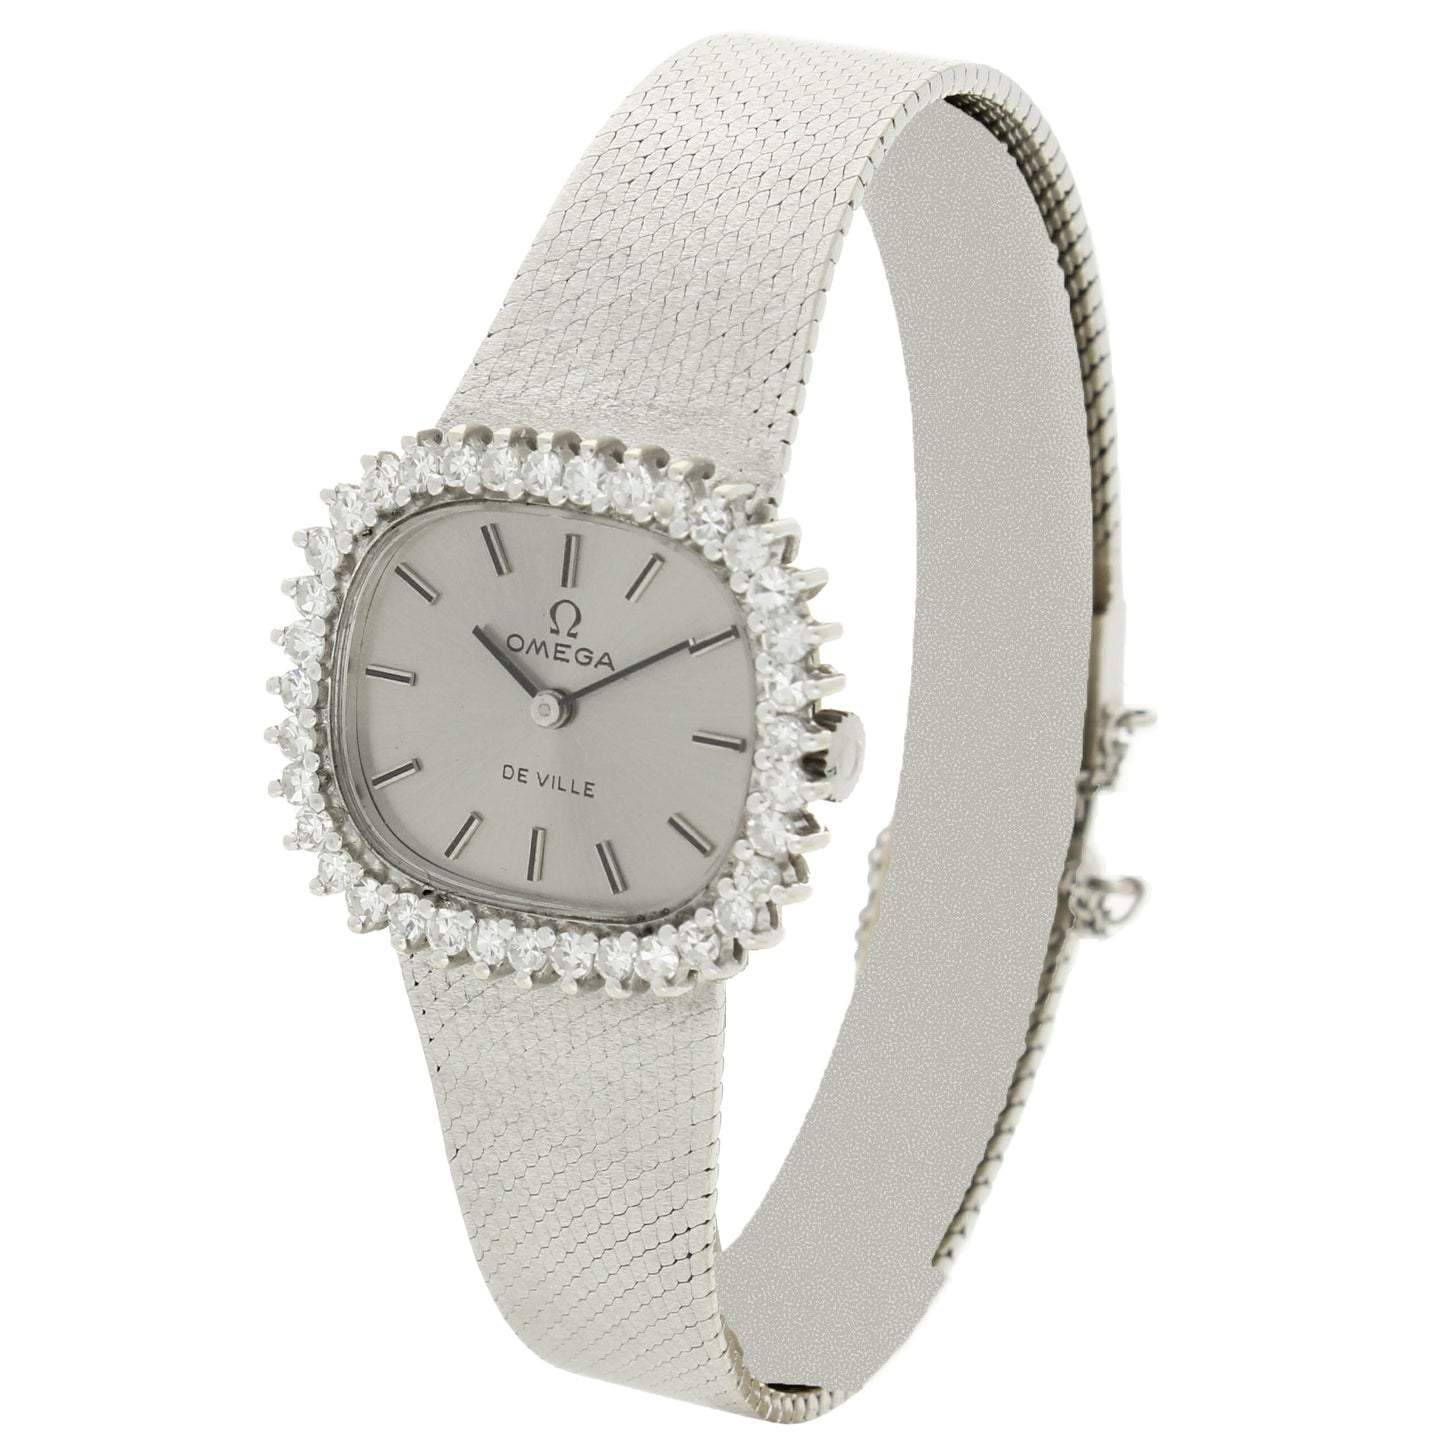 18ct white gold and diamond set OMEGA De Ville bracelet watch. Made 1974